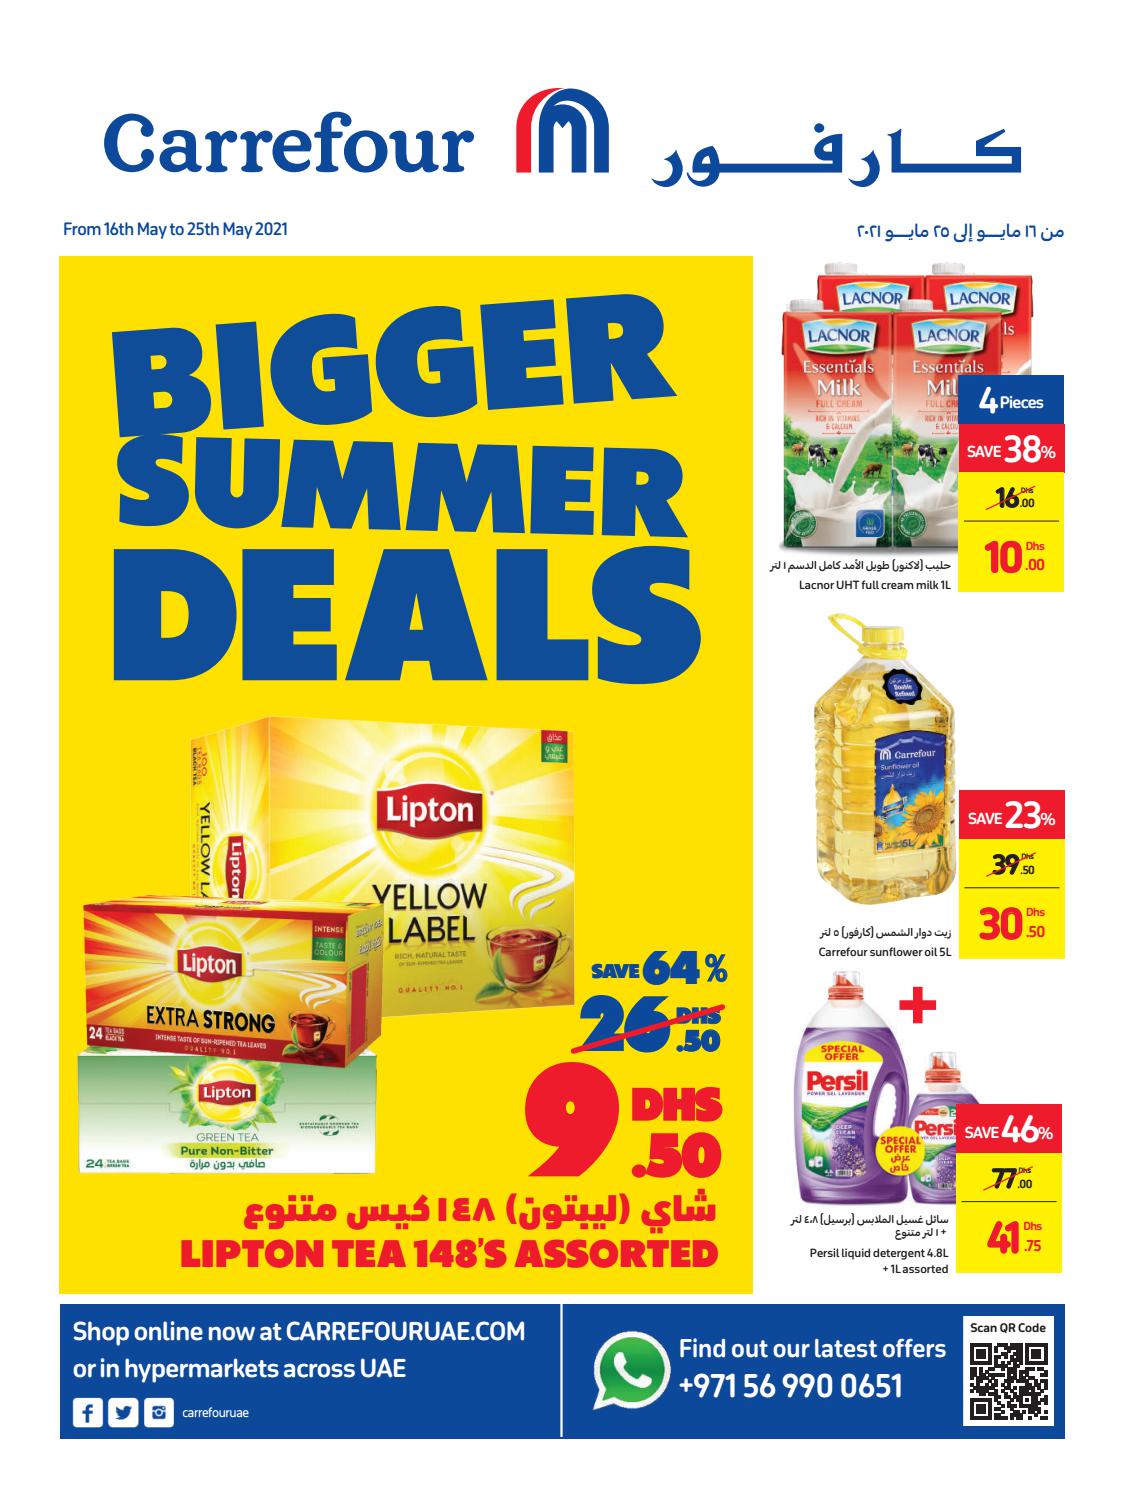 Carrefour Bigger Summer Deals Offers – Catalog